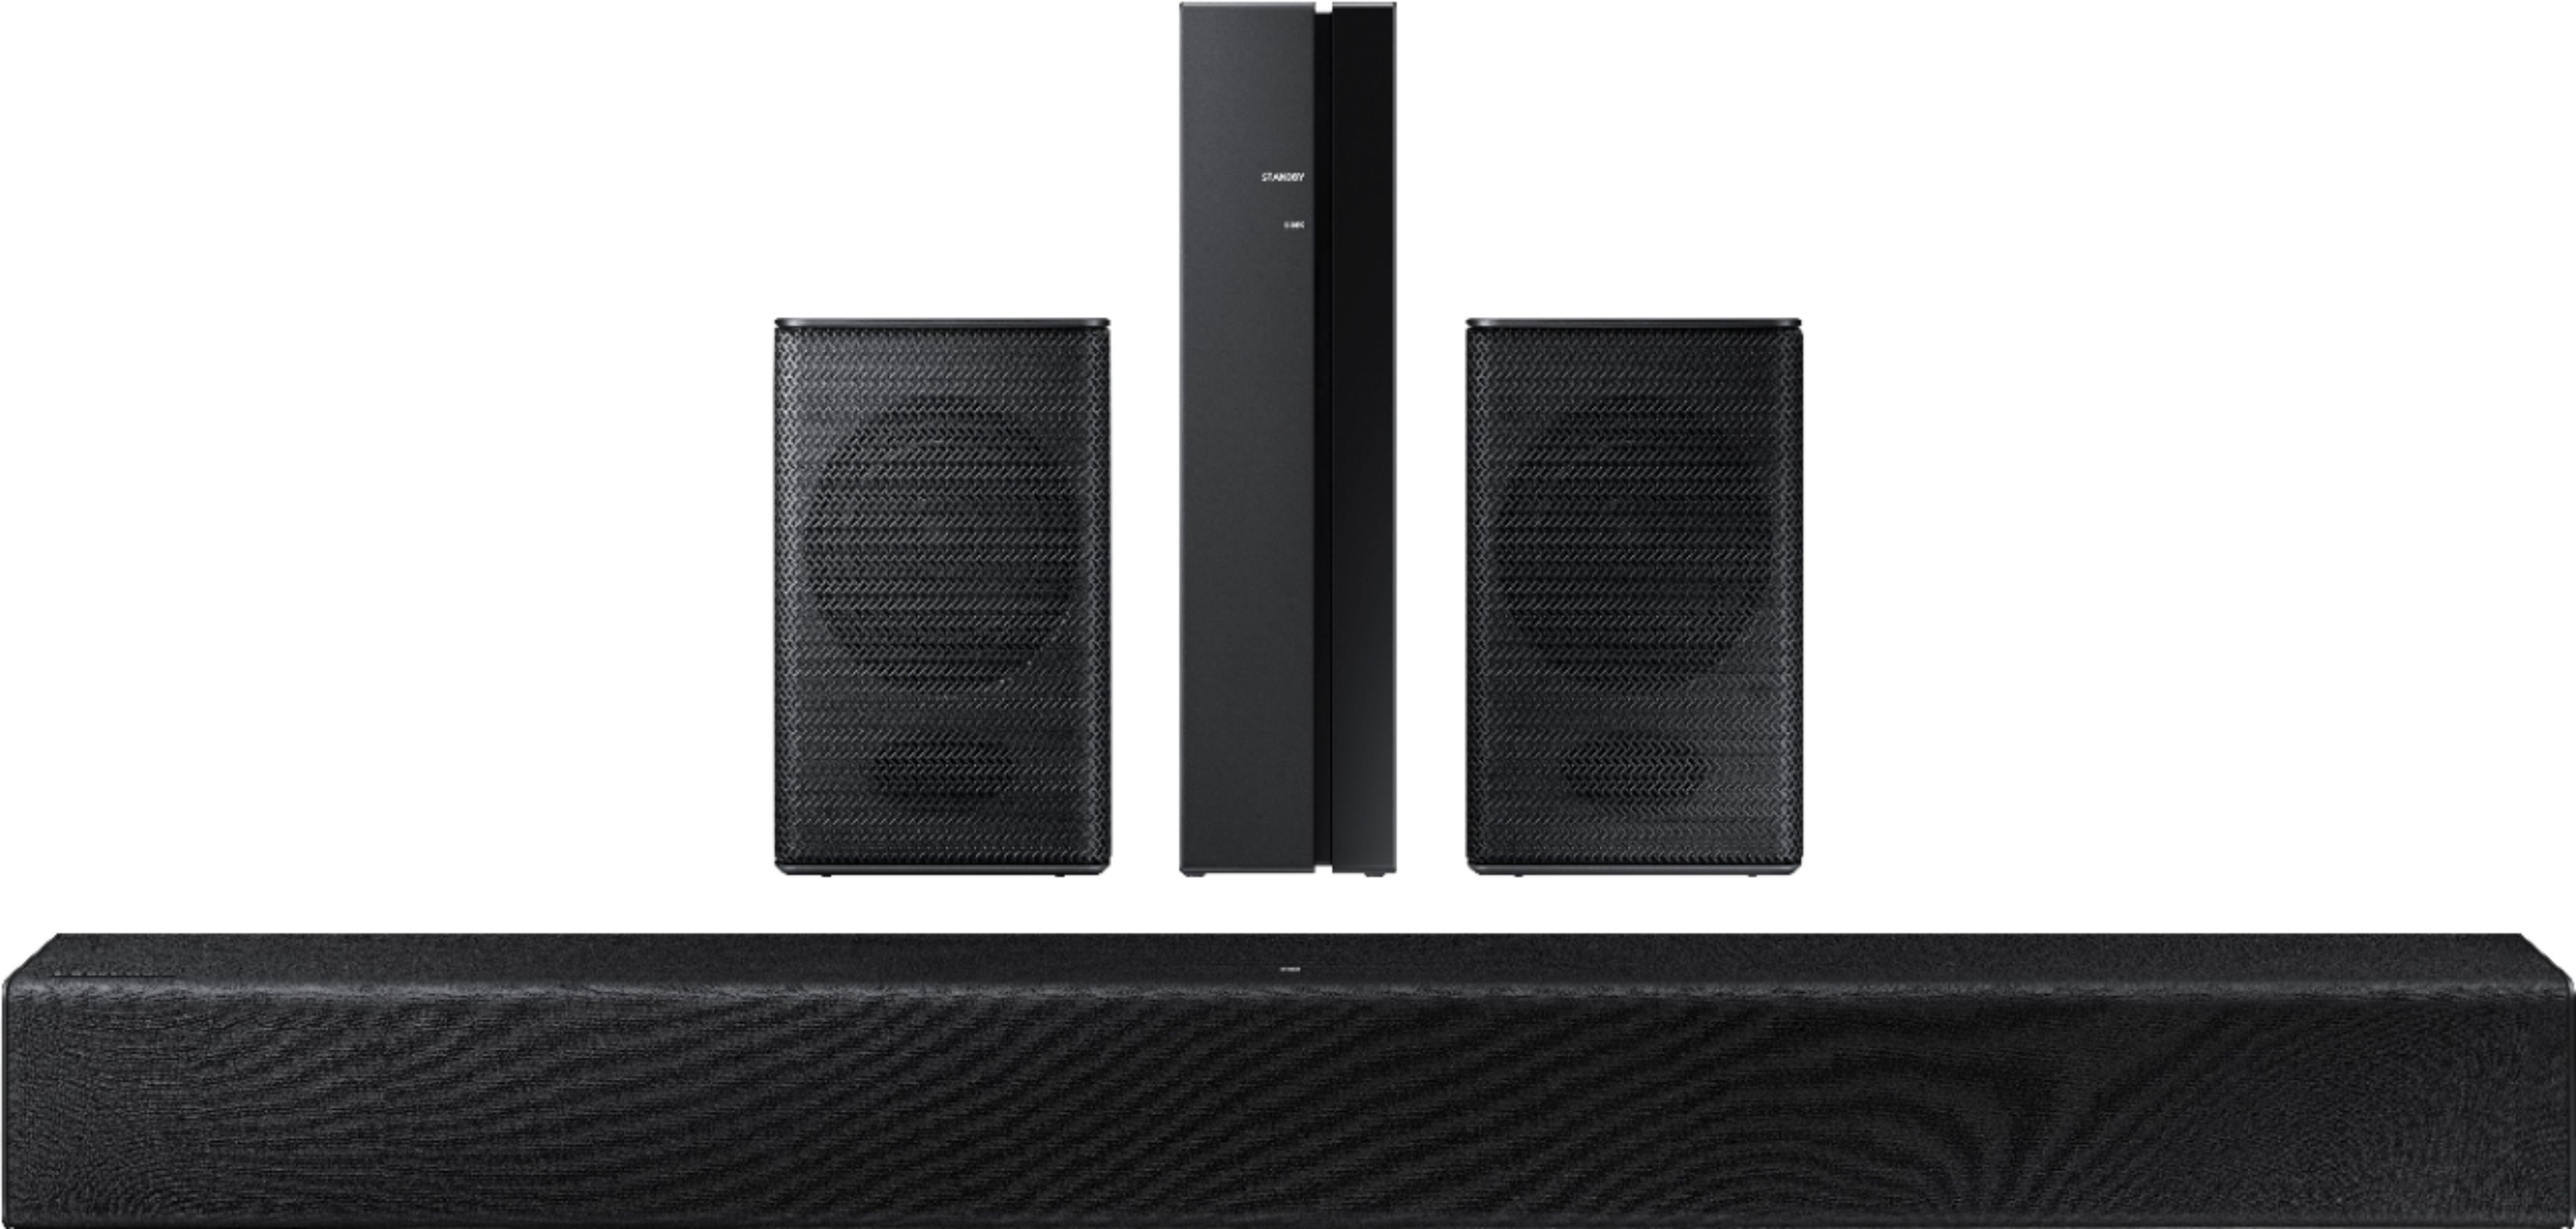 Spiller skak rapport skadedyr Samsung HW-A40R 4ch Sound bar with Surround sound expansion Black HW-A40R/ZA  - Best Buy